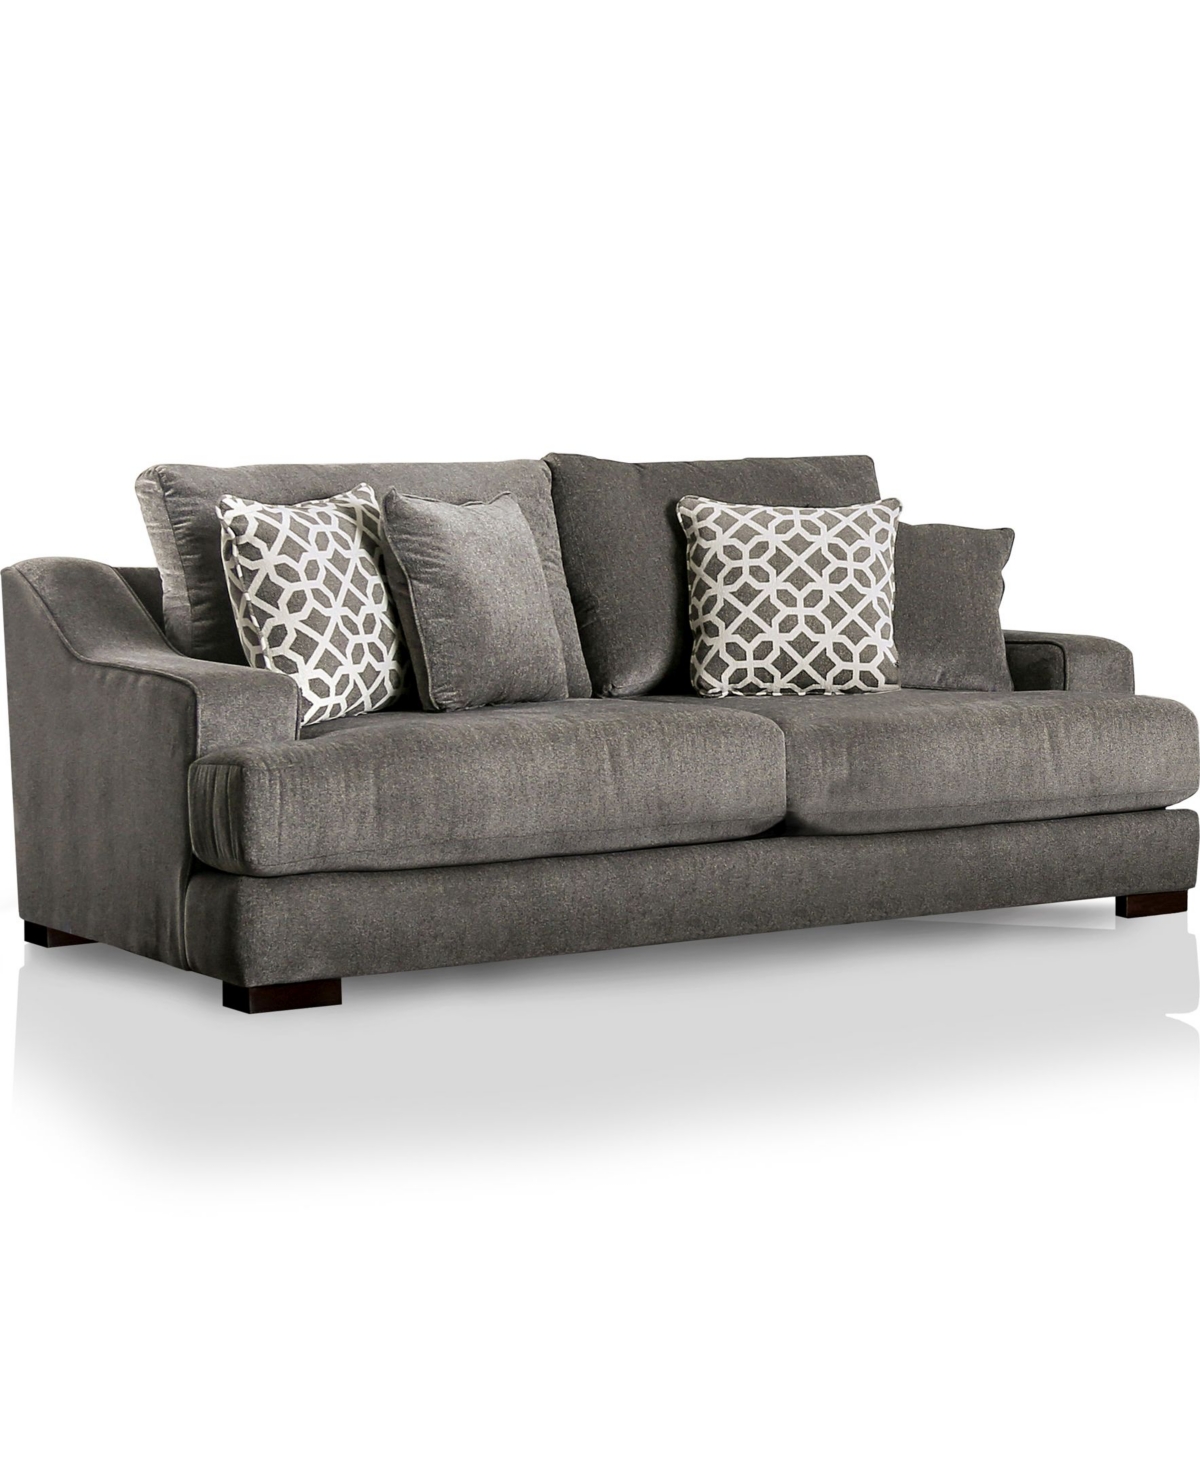 of America Xolan Upholstered Sofa